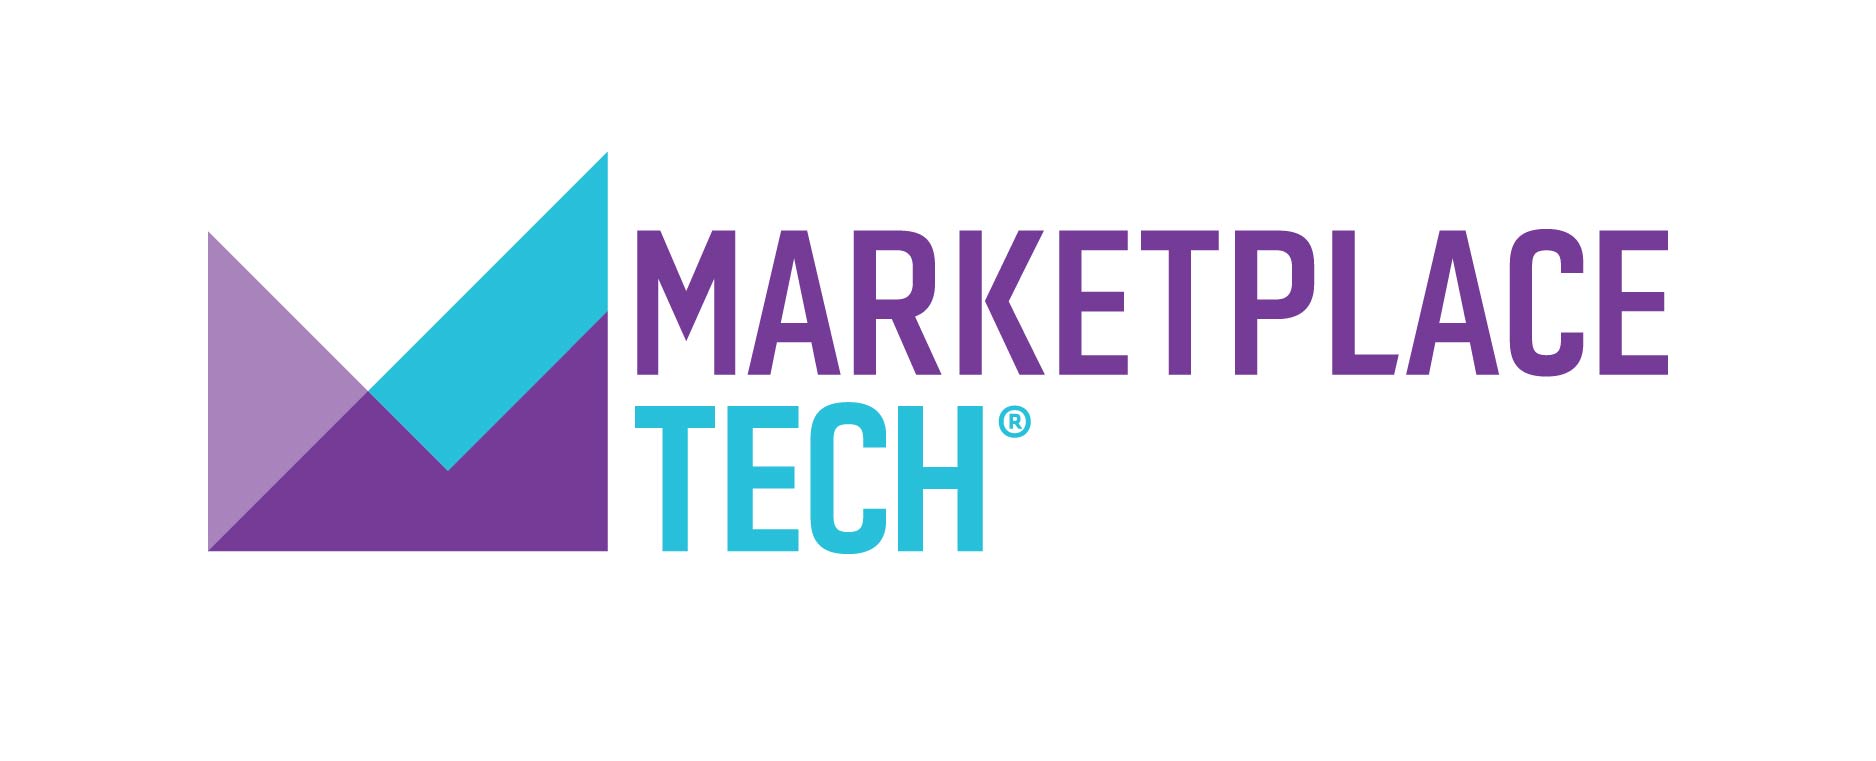 Marketplace Tech Report Logo - 3